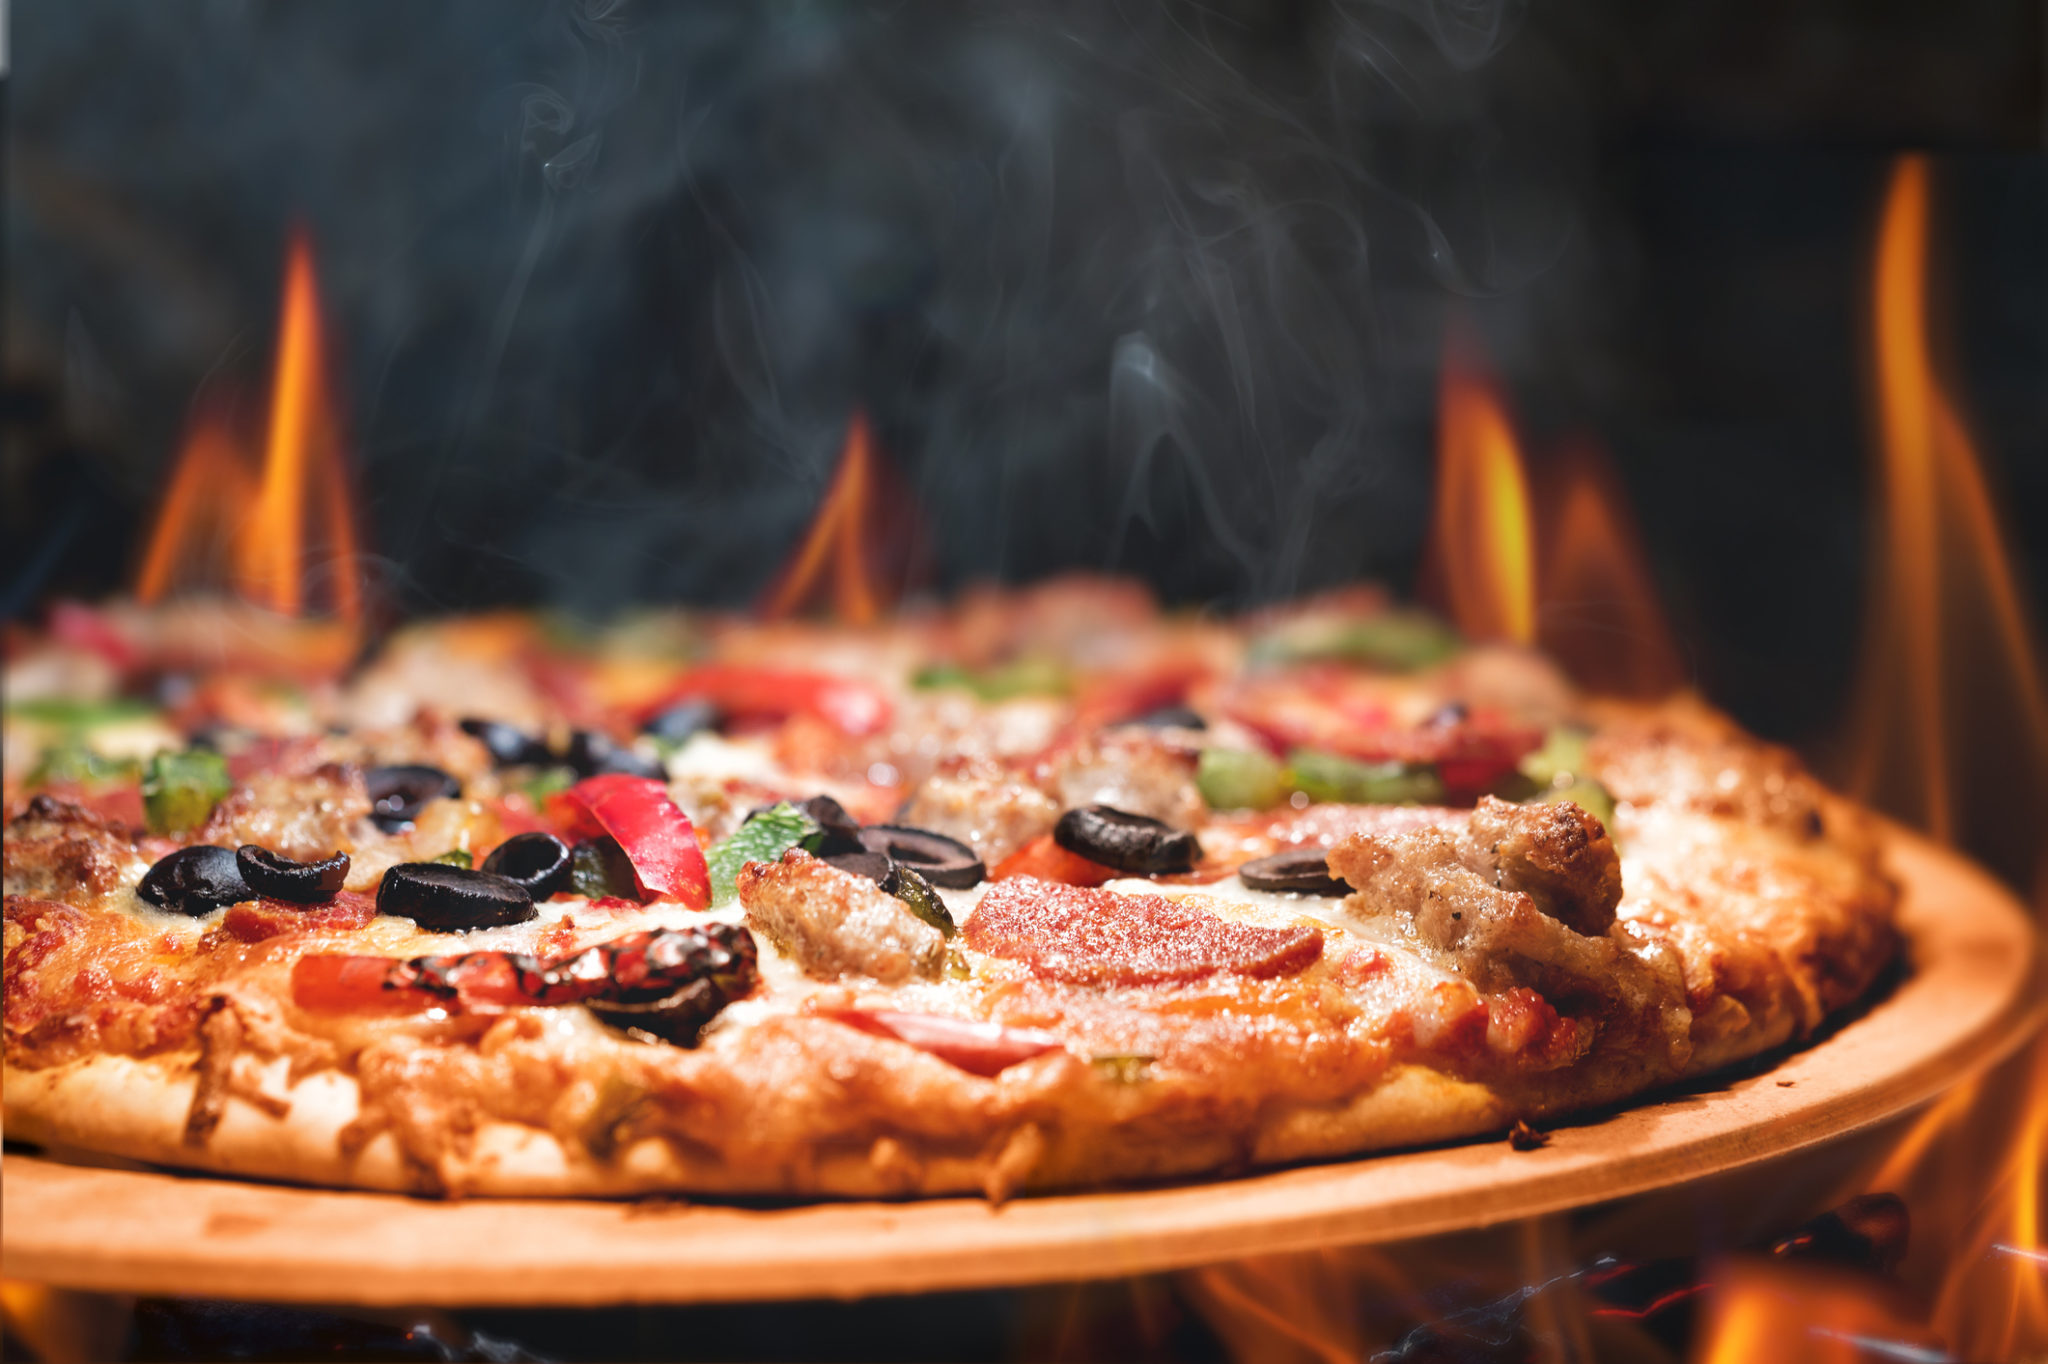 Open flame cooking is a growing trend in restaurants